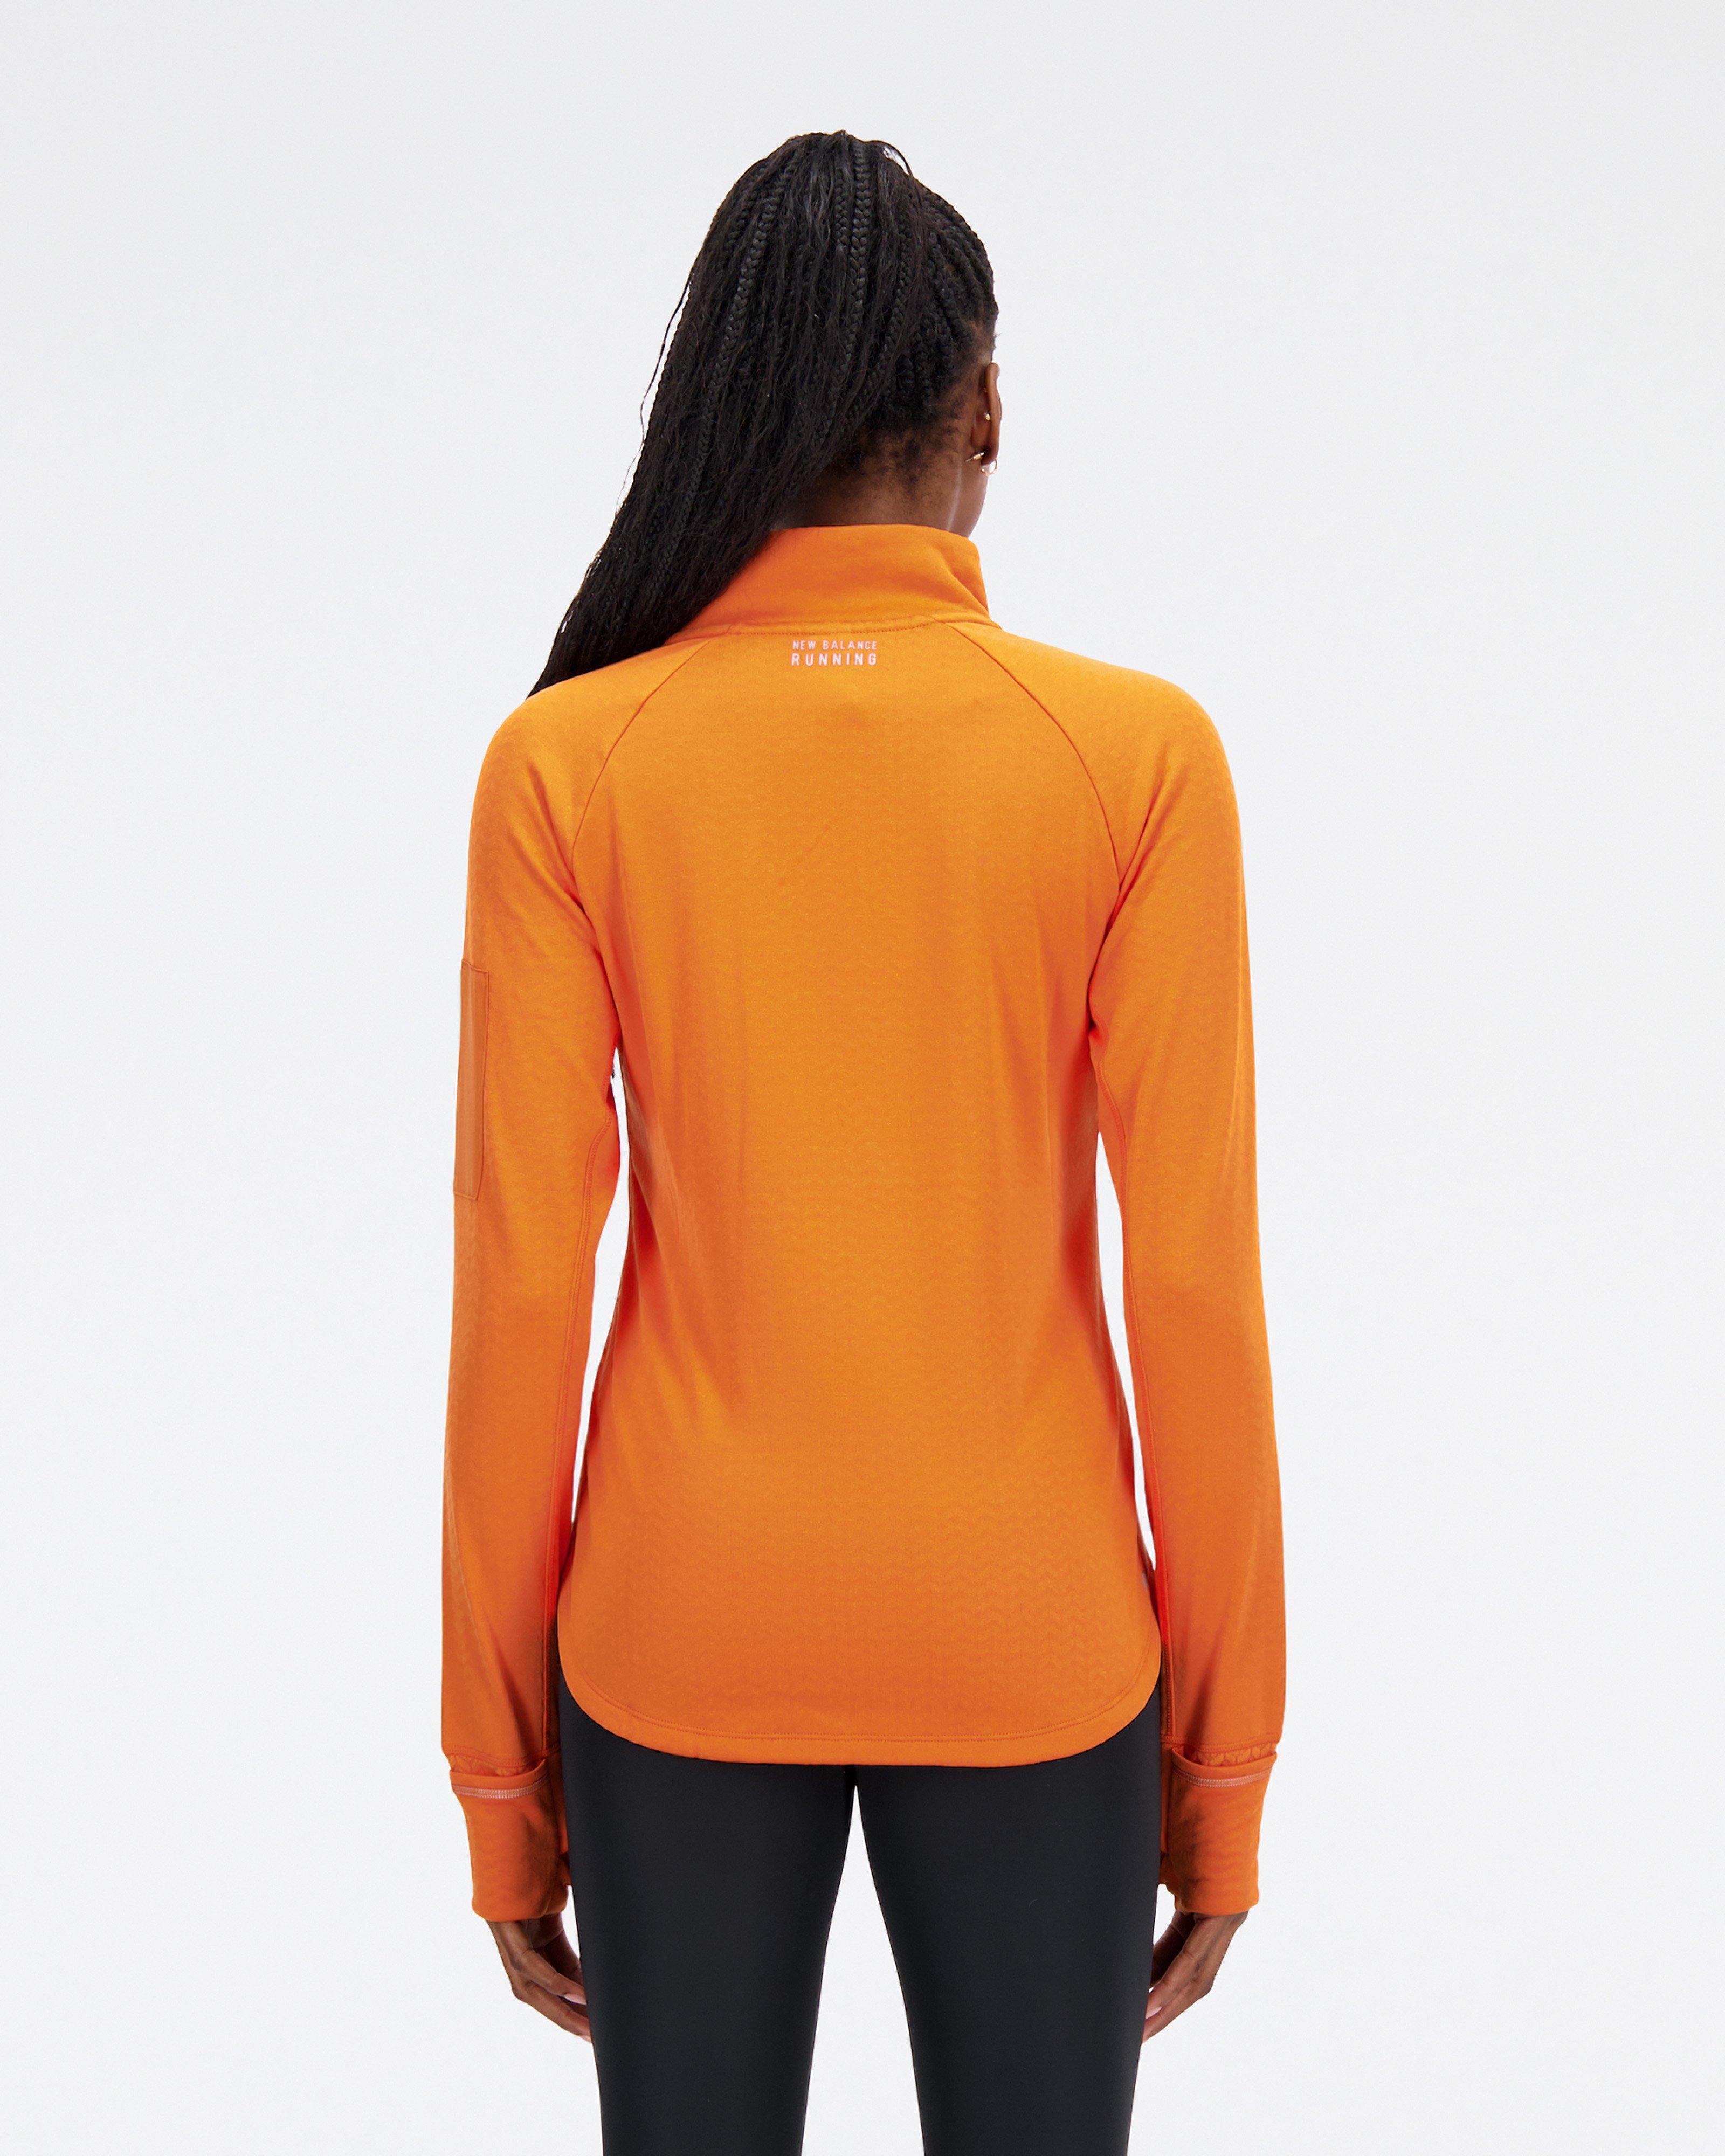 New Balance Women’s Impact Run ¼ Zip Top -  Orange